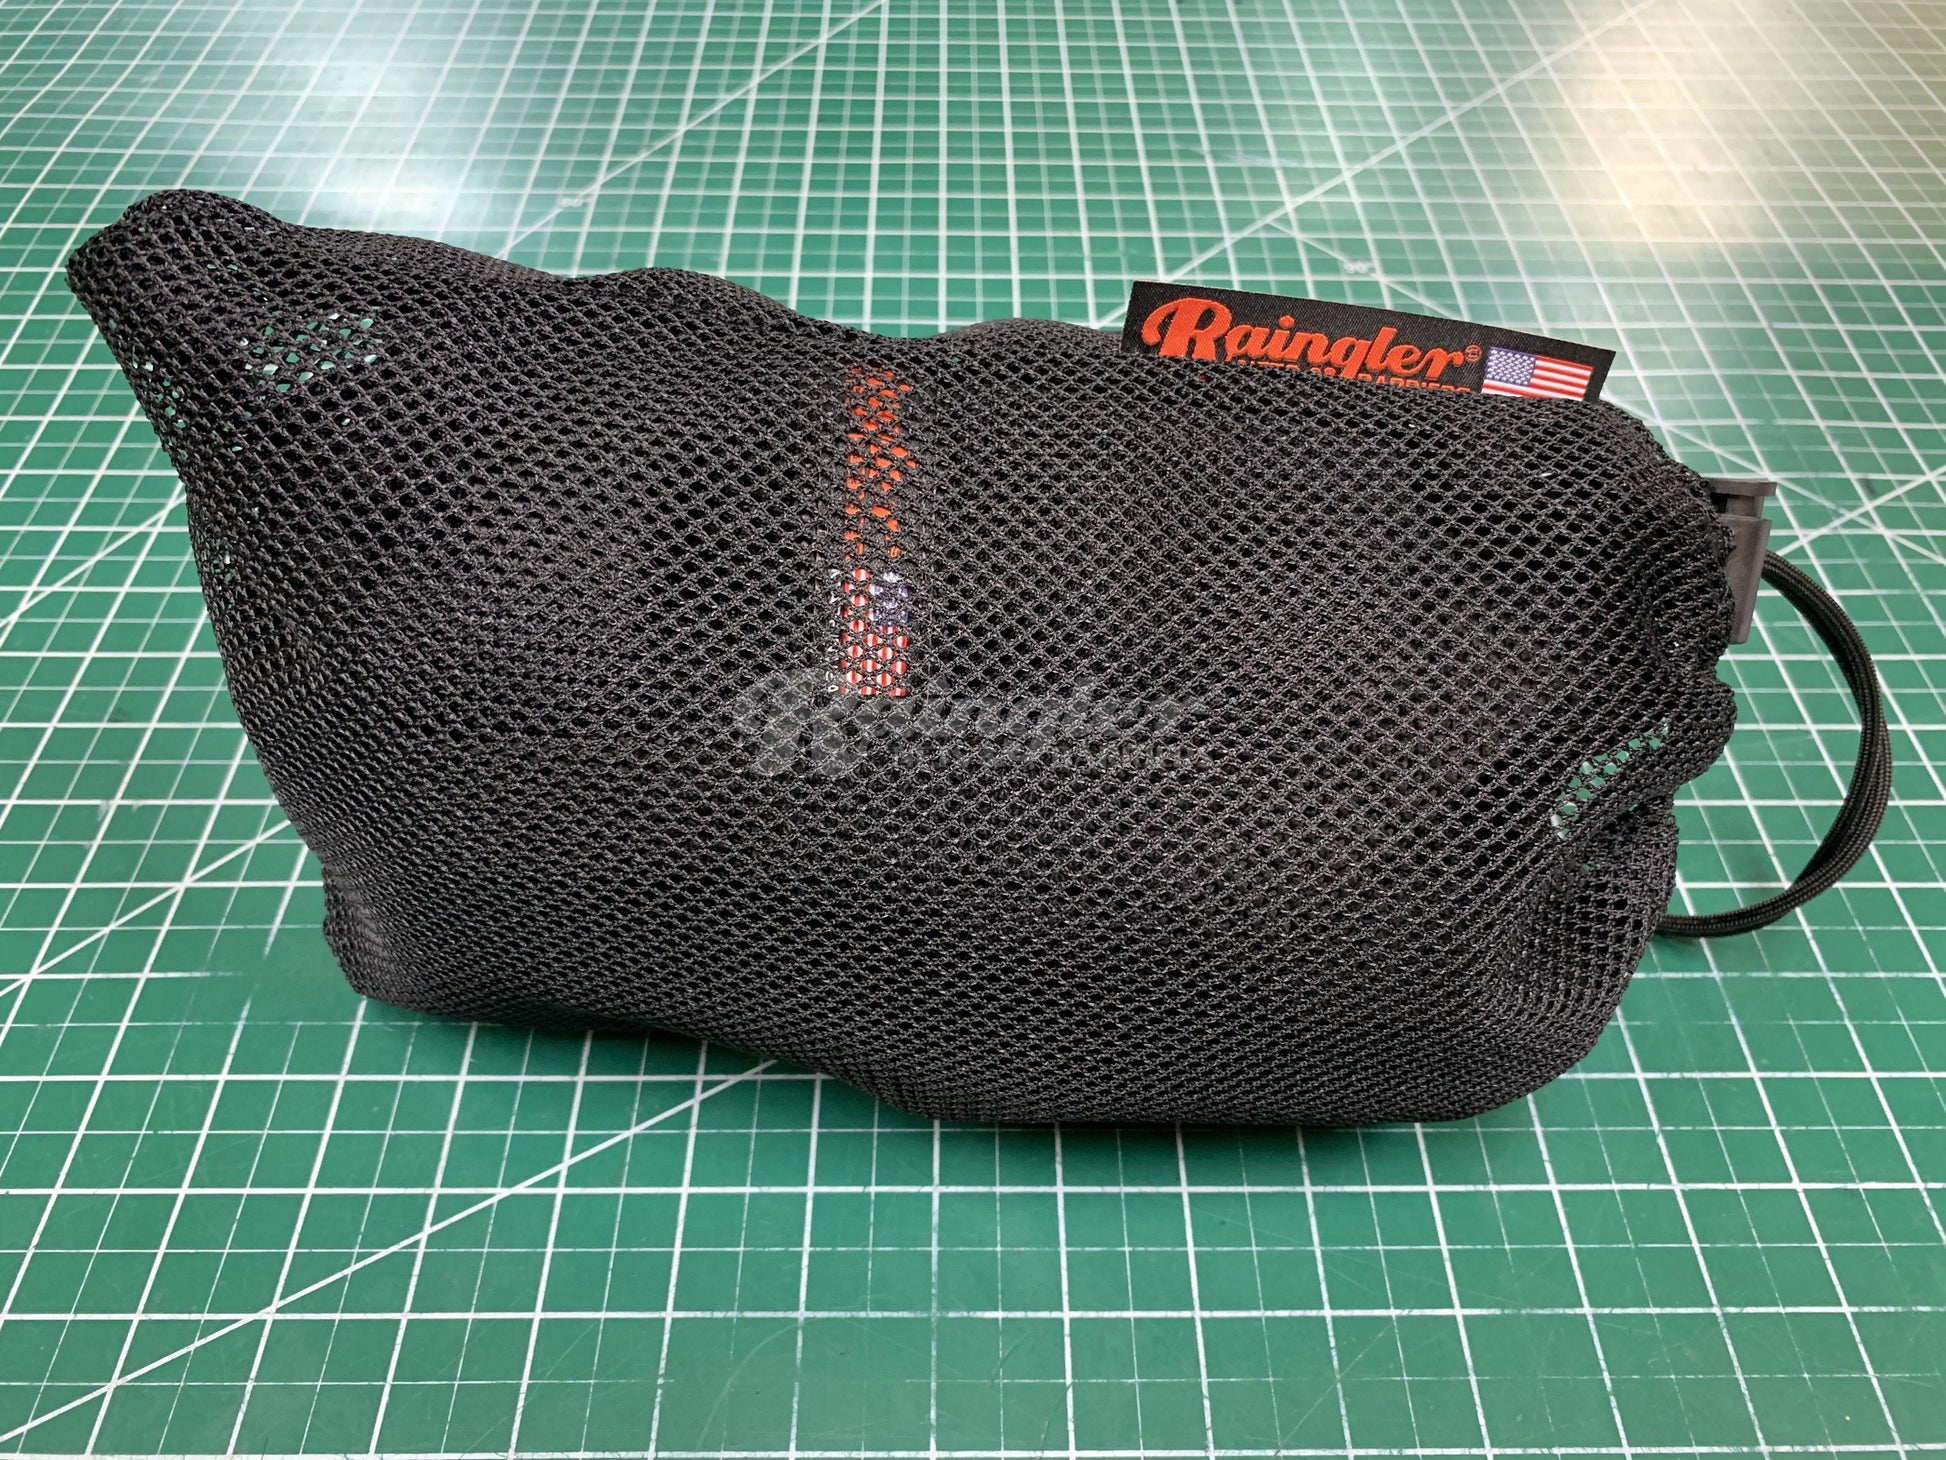 MIL-SPEC Mesh Bag - Match my product size-Raingler